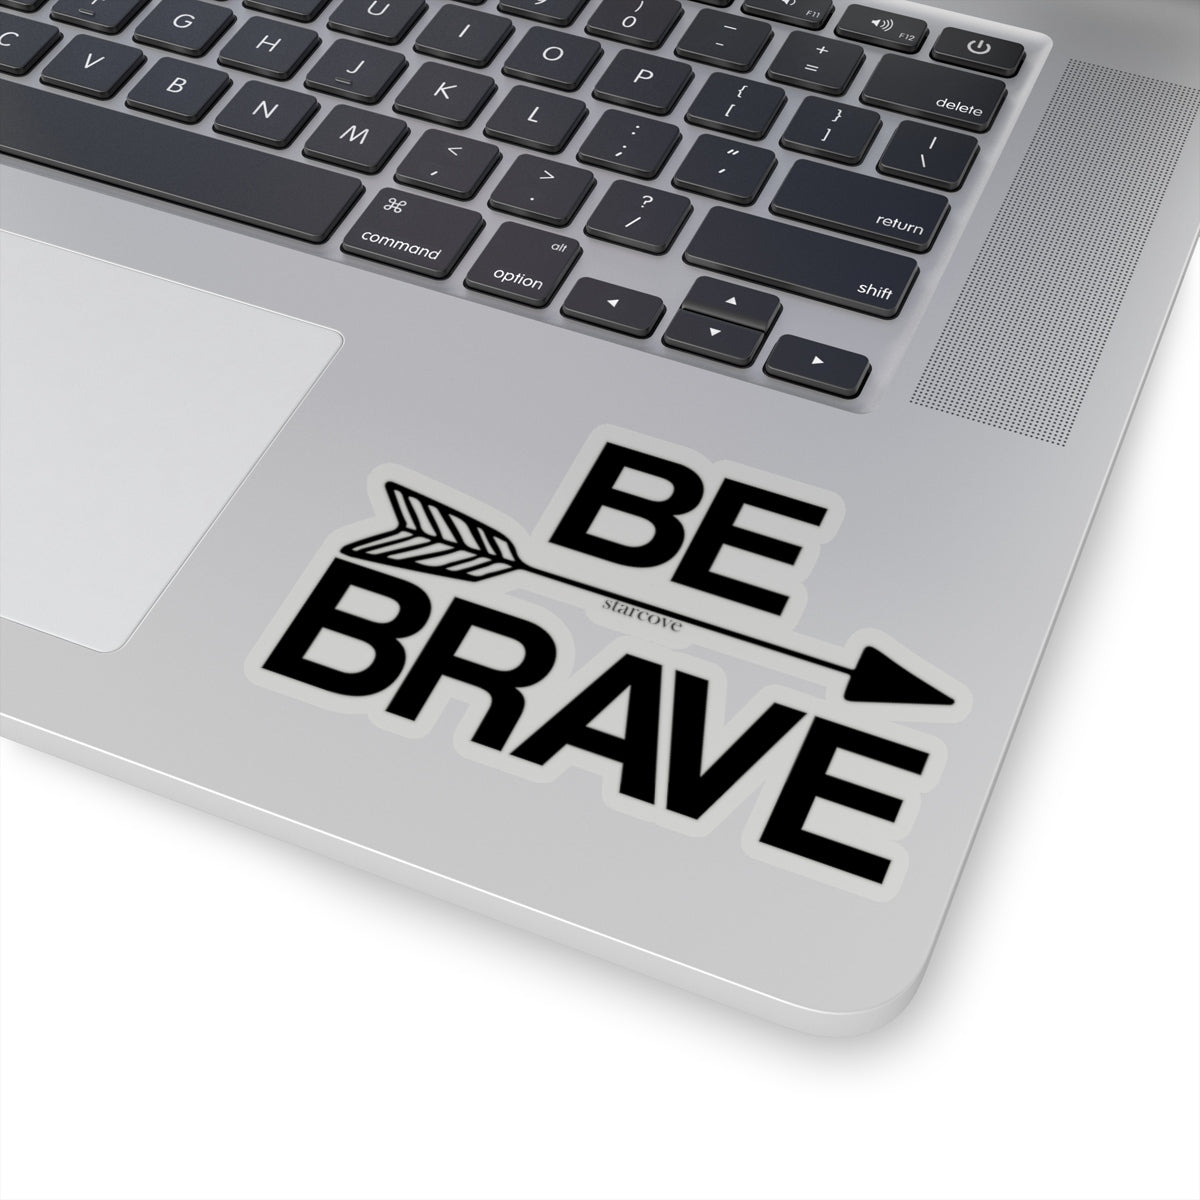 Be Brave Sticker, Kiss-Cut Vsco Laptop Vinyl Cute Waterproof Tumbler Car Bumper Waterbottle Aesthetic Label Wall Decal Starcove Fashion